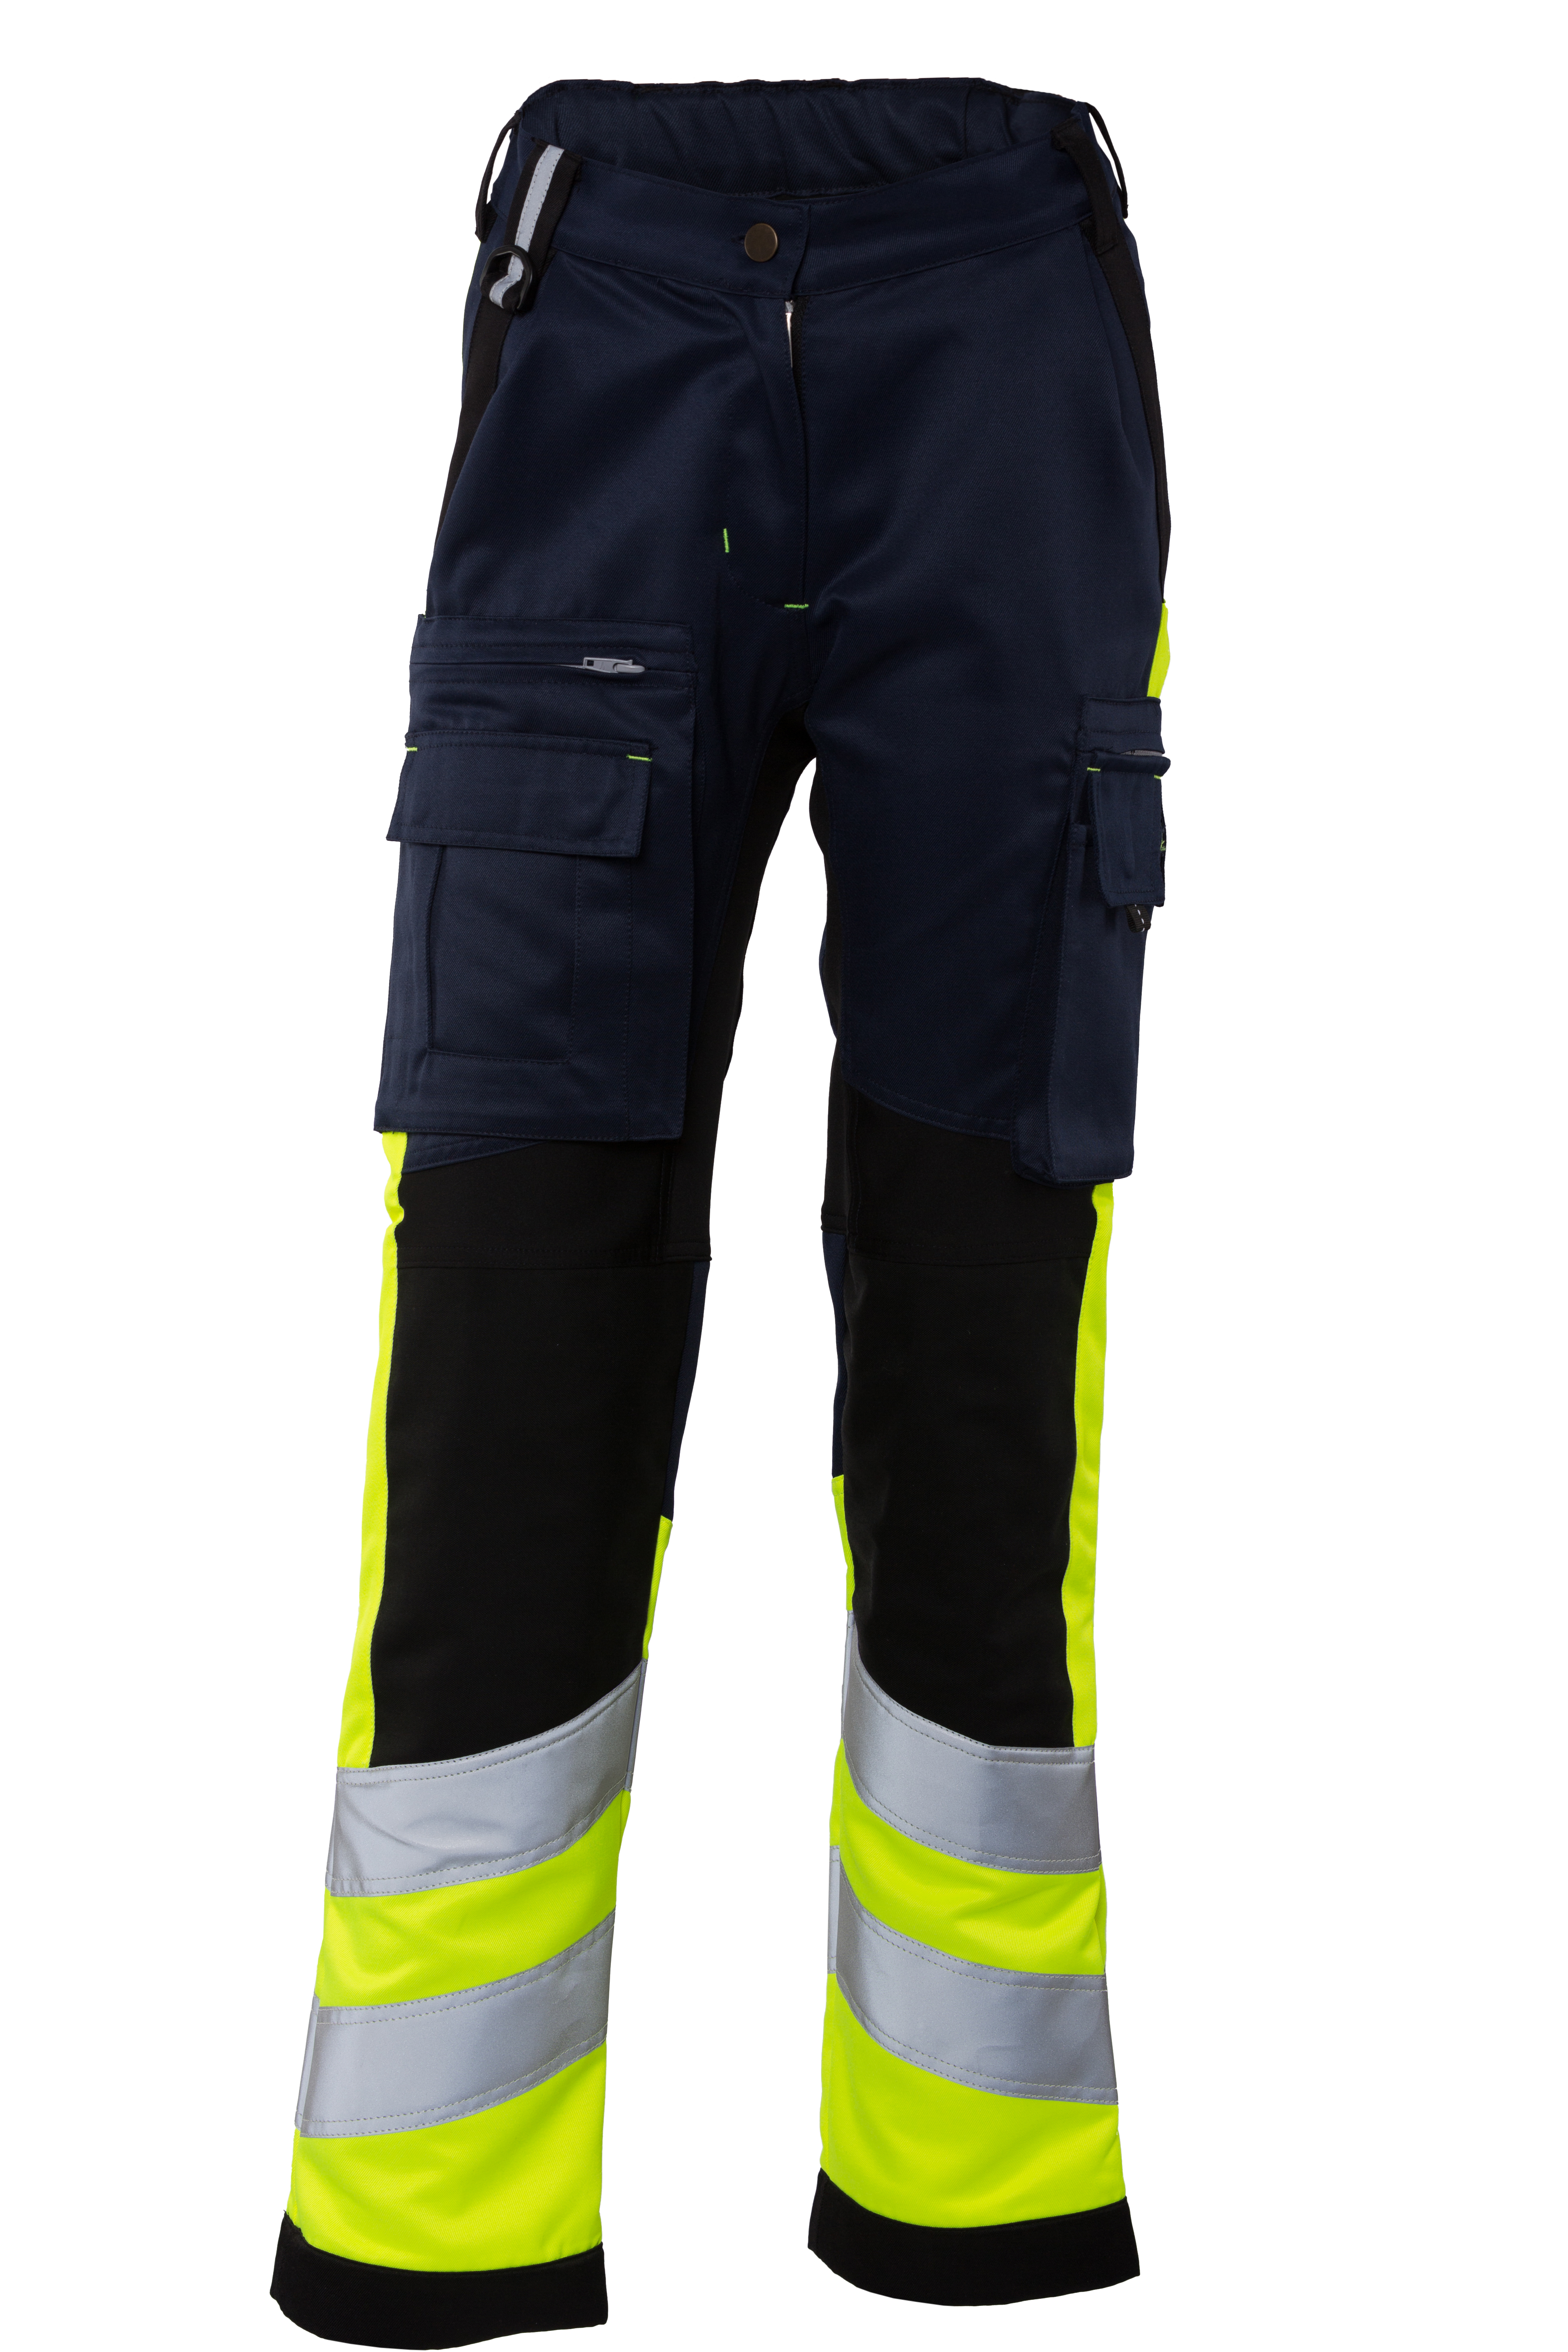 Rescuewear Damen Hose Stretch HiVis Klasse 1 Marineblau / Schwarz / Neon Gelb  - 38